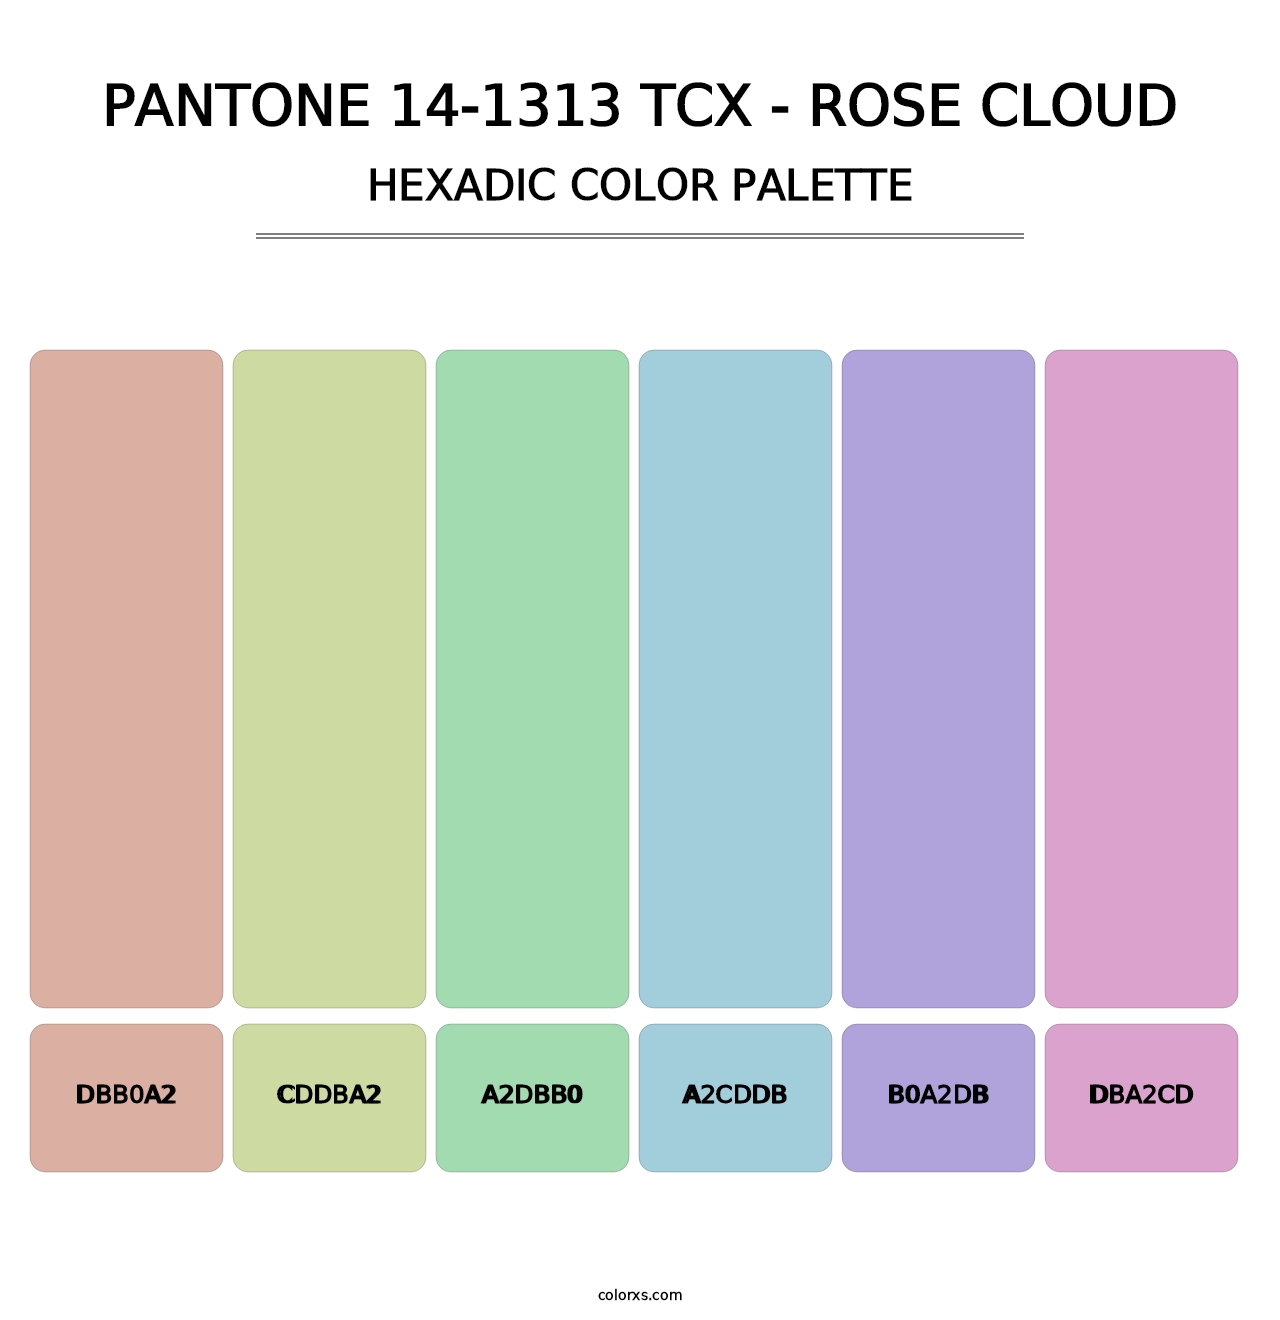 PANTONE 14-1313 TCX - Rose Cloud - Hexadic Color Palette